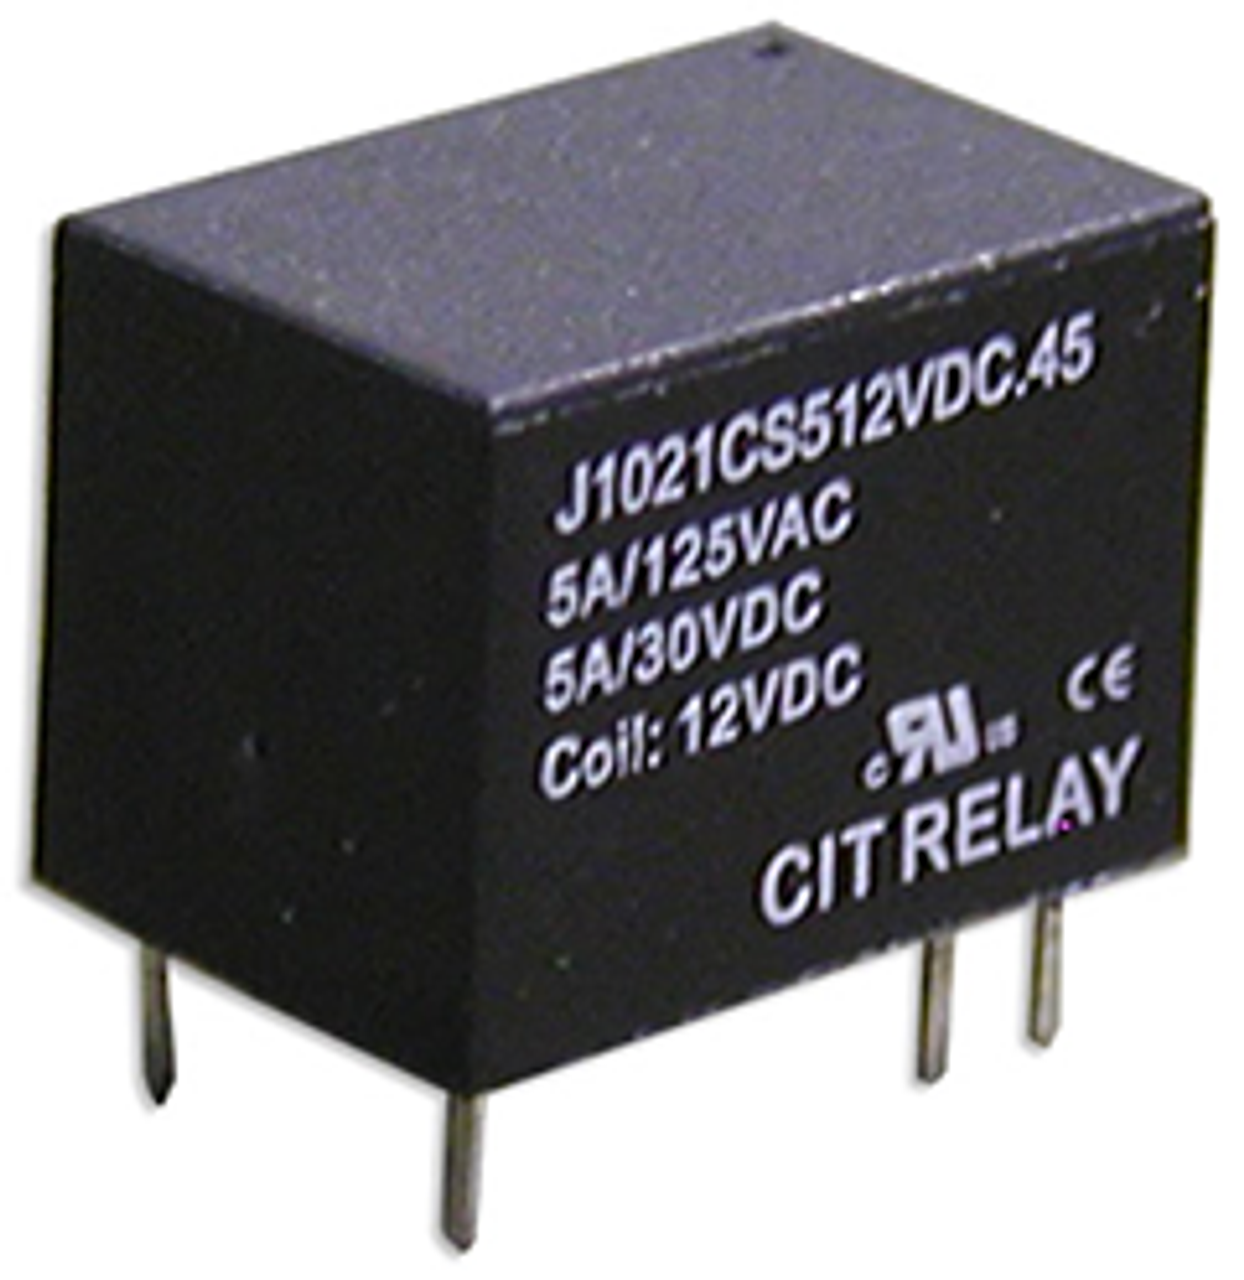 CIT Relay and Switch J1021CS112VDC.20 Signal Relays